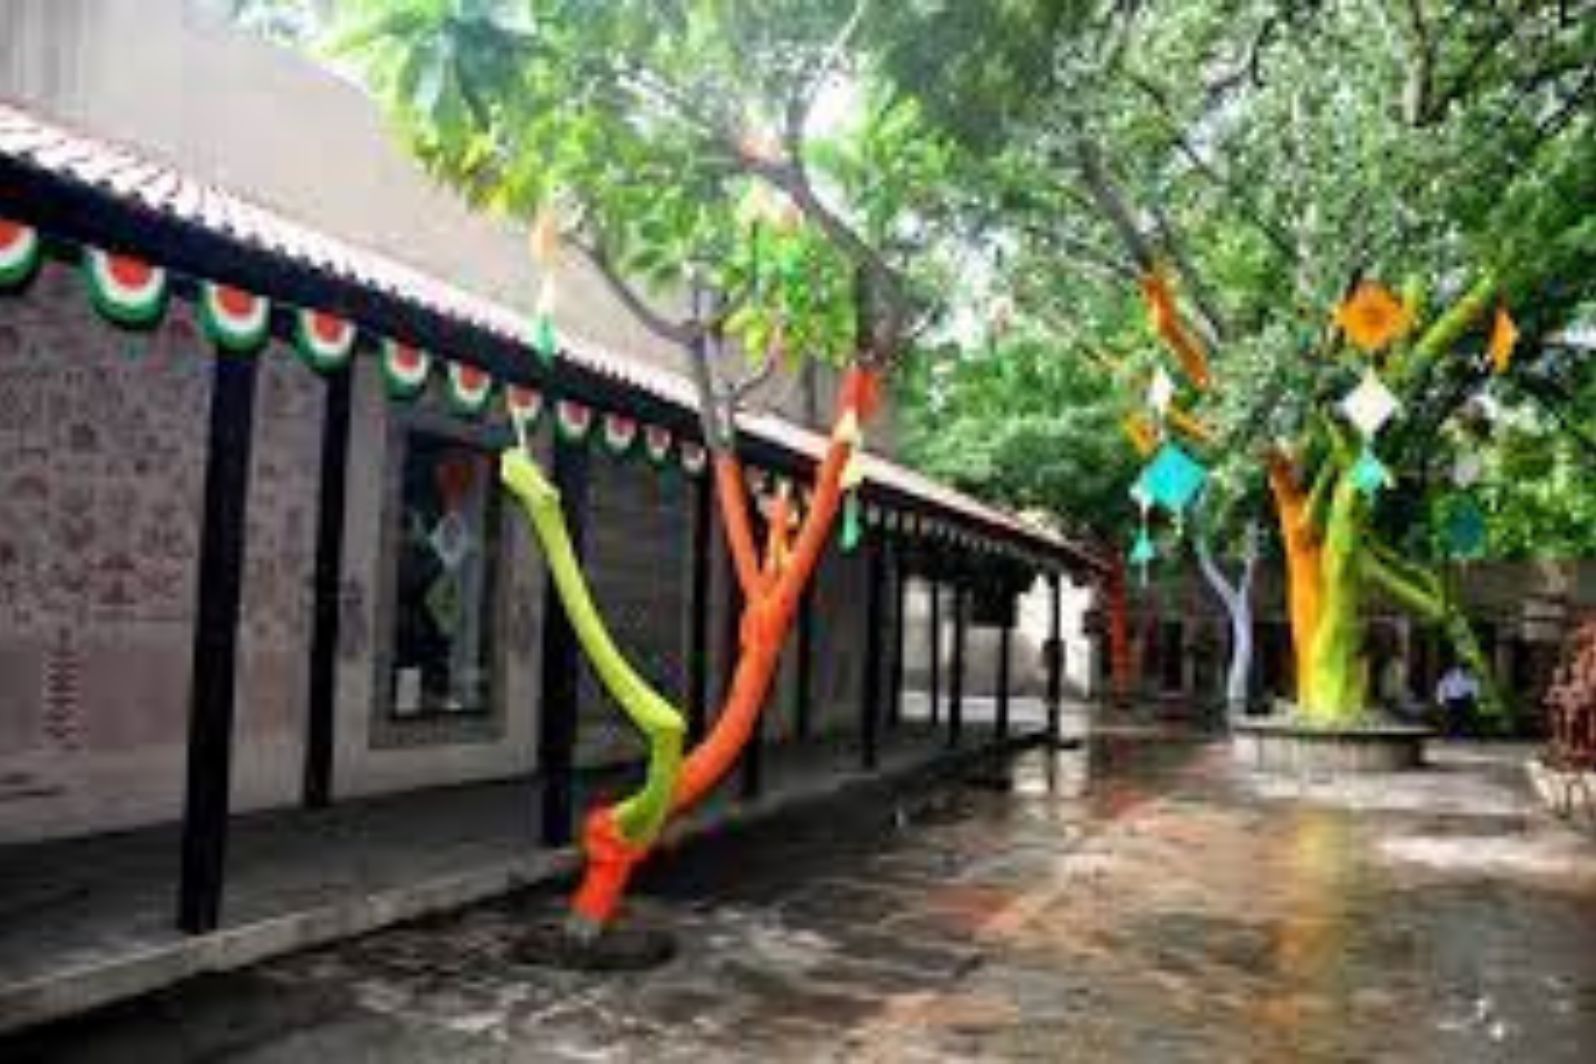 national handicrafts and handlooms museum new delhi